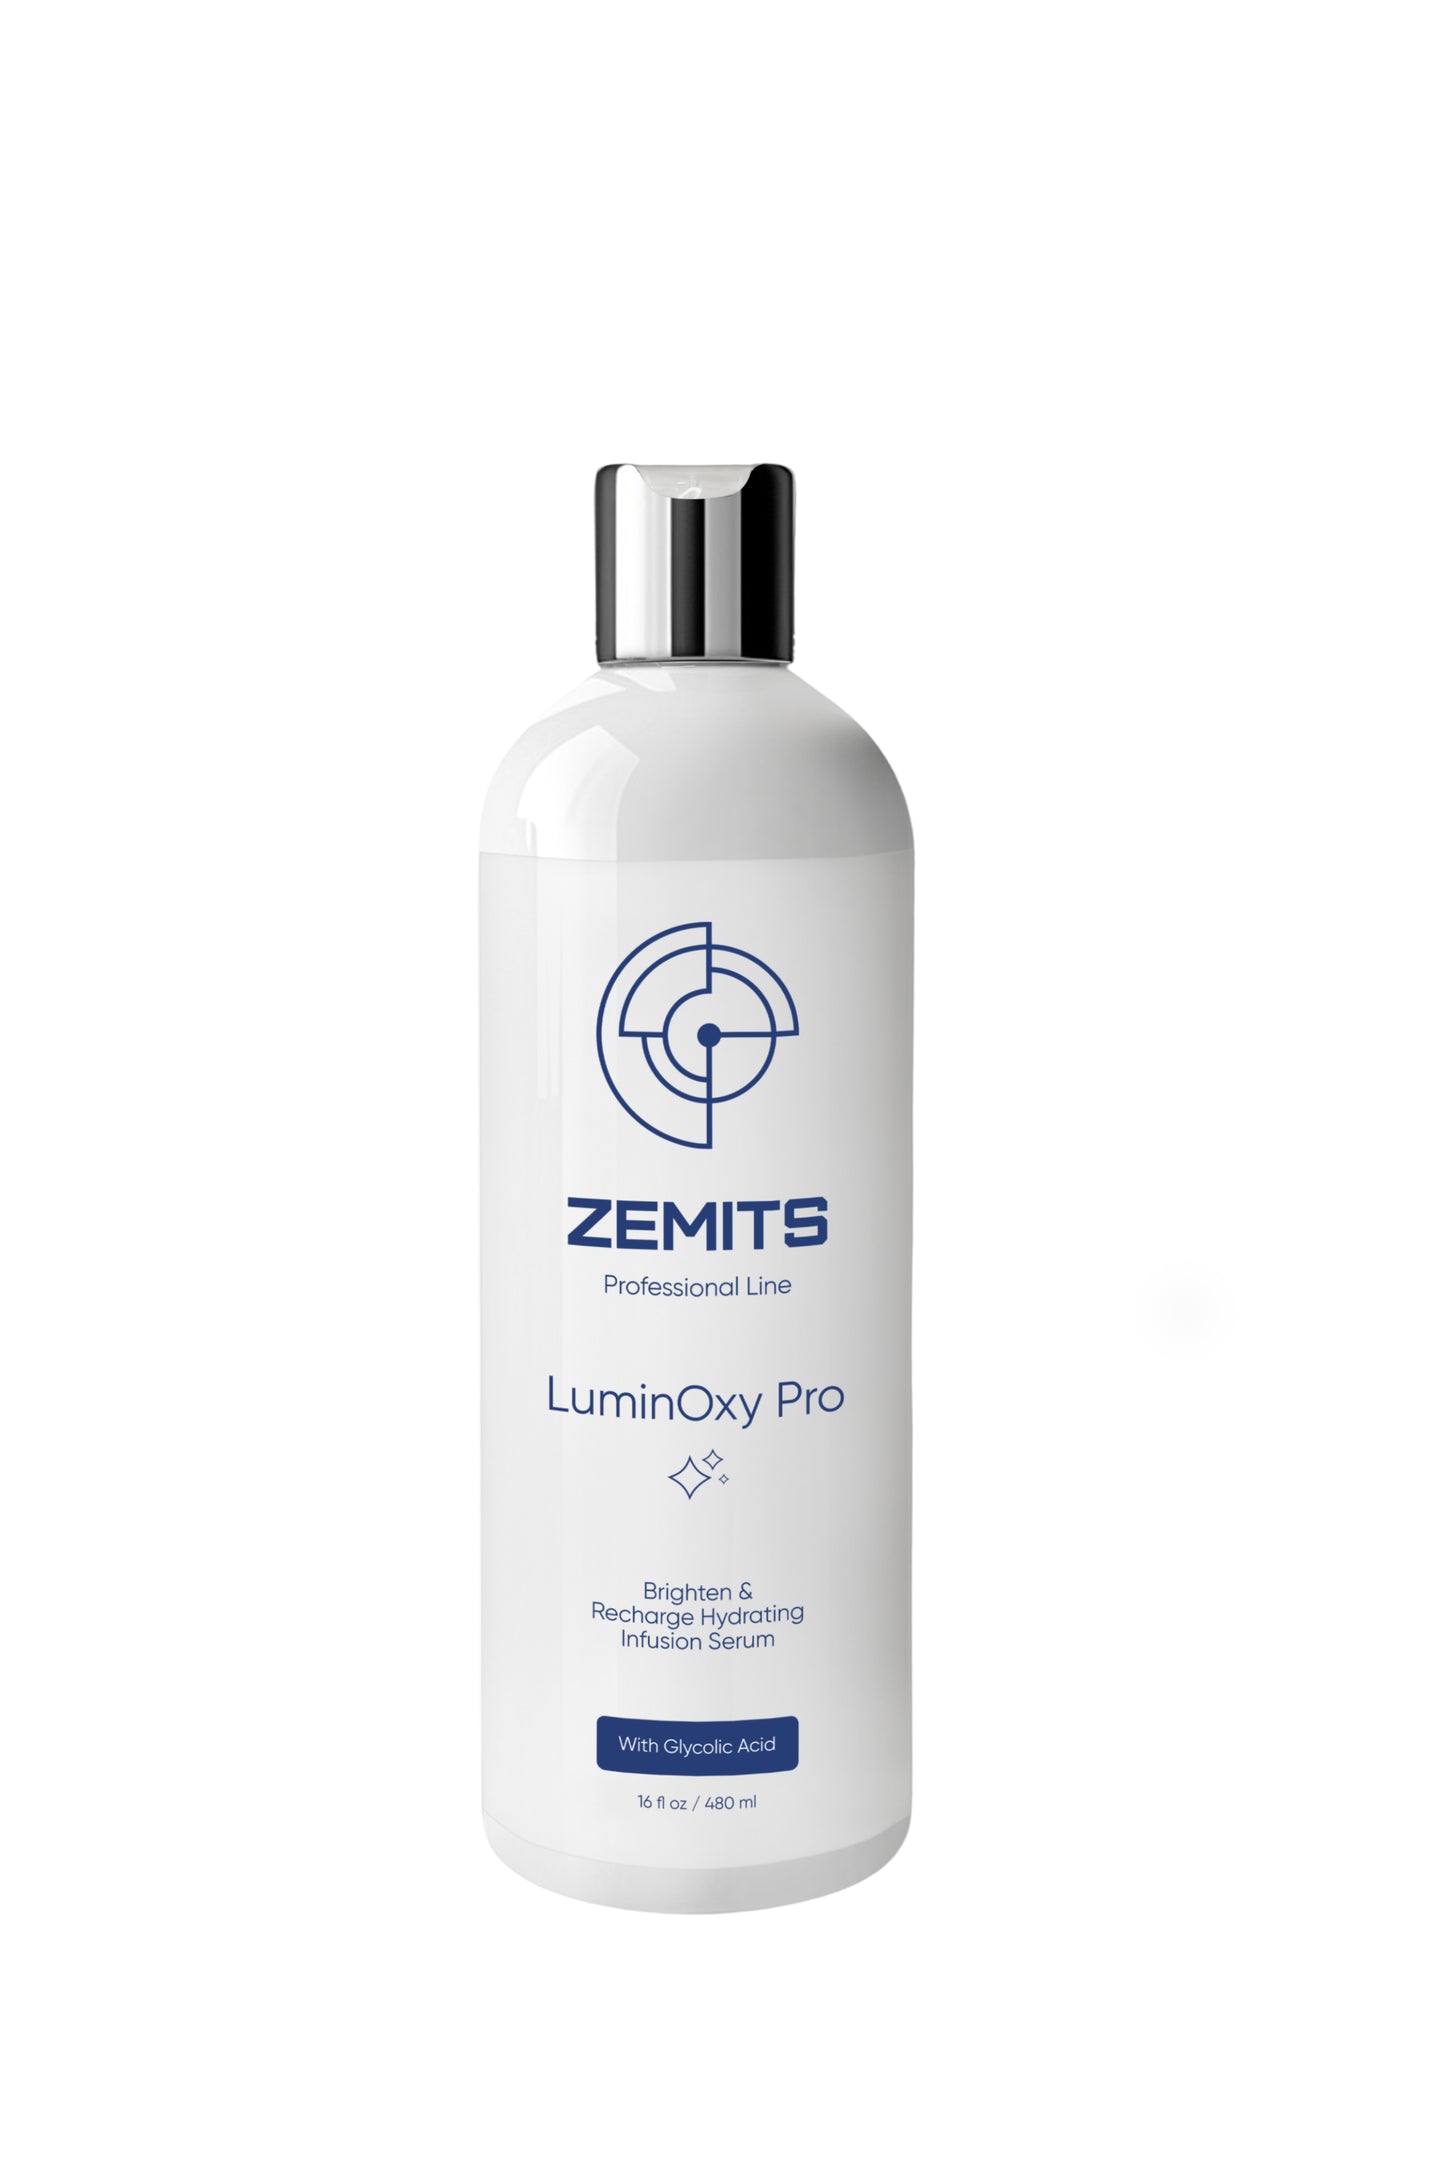 Zemits LuminOxy  Pro Brighten & Recharge Hydrating Infusion Serum with Glycolic Acid, 16 fl oz